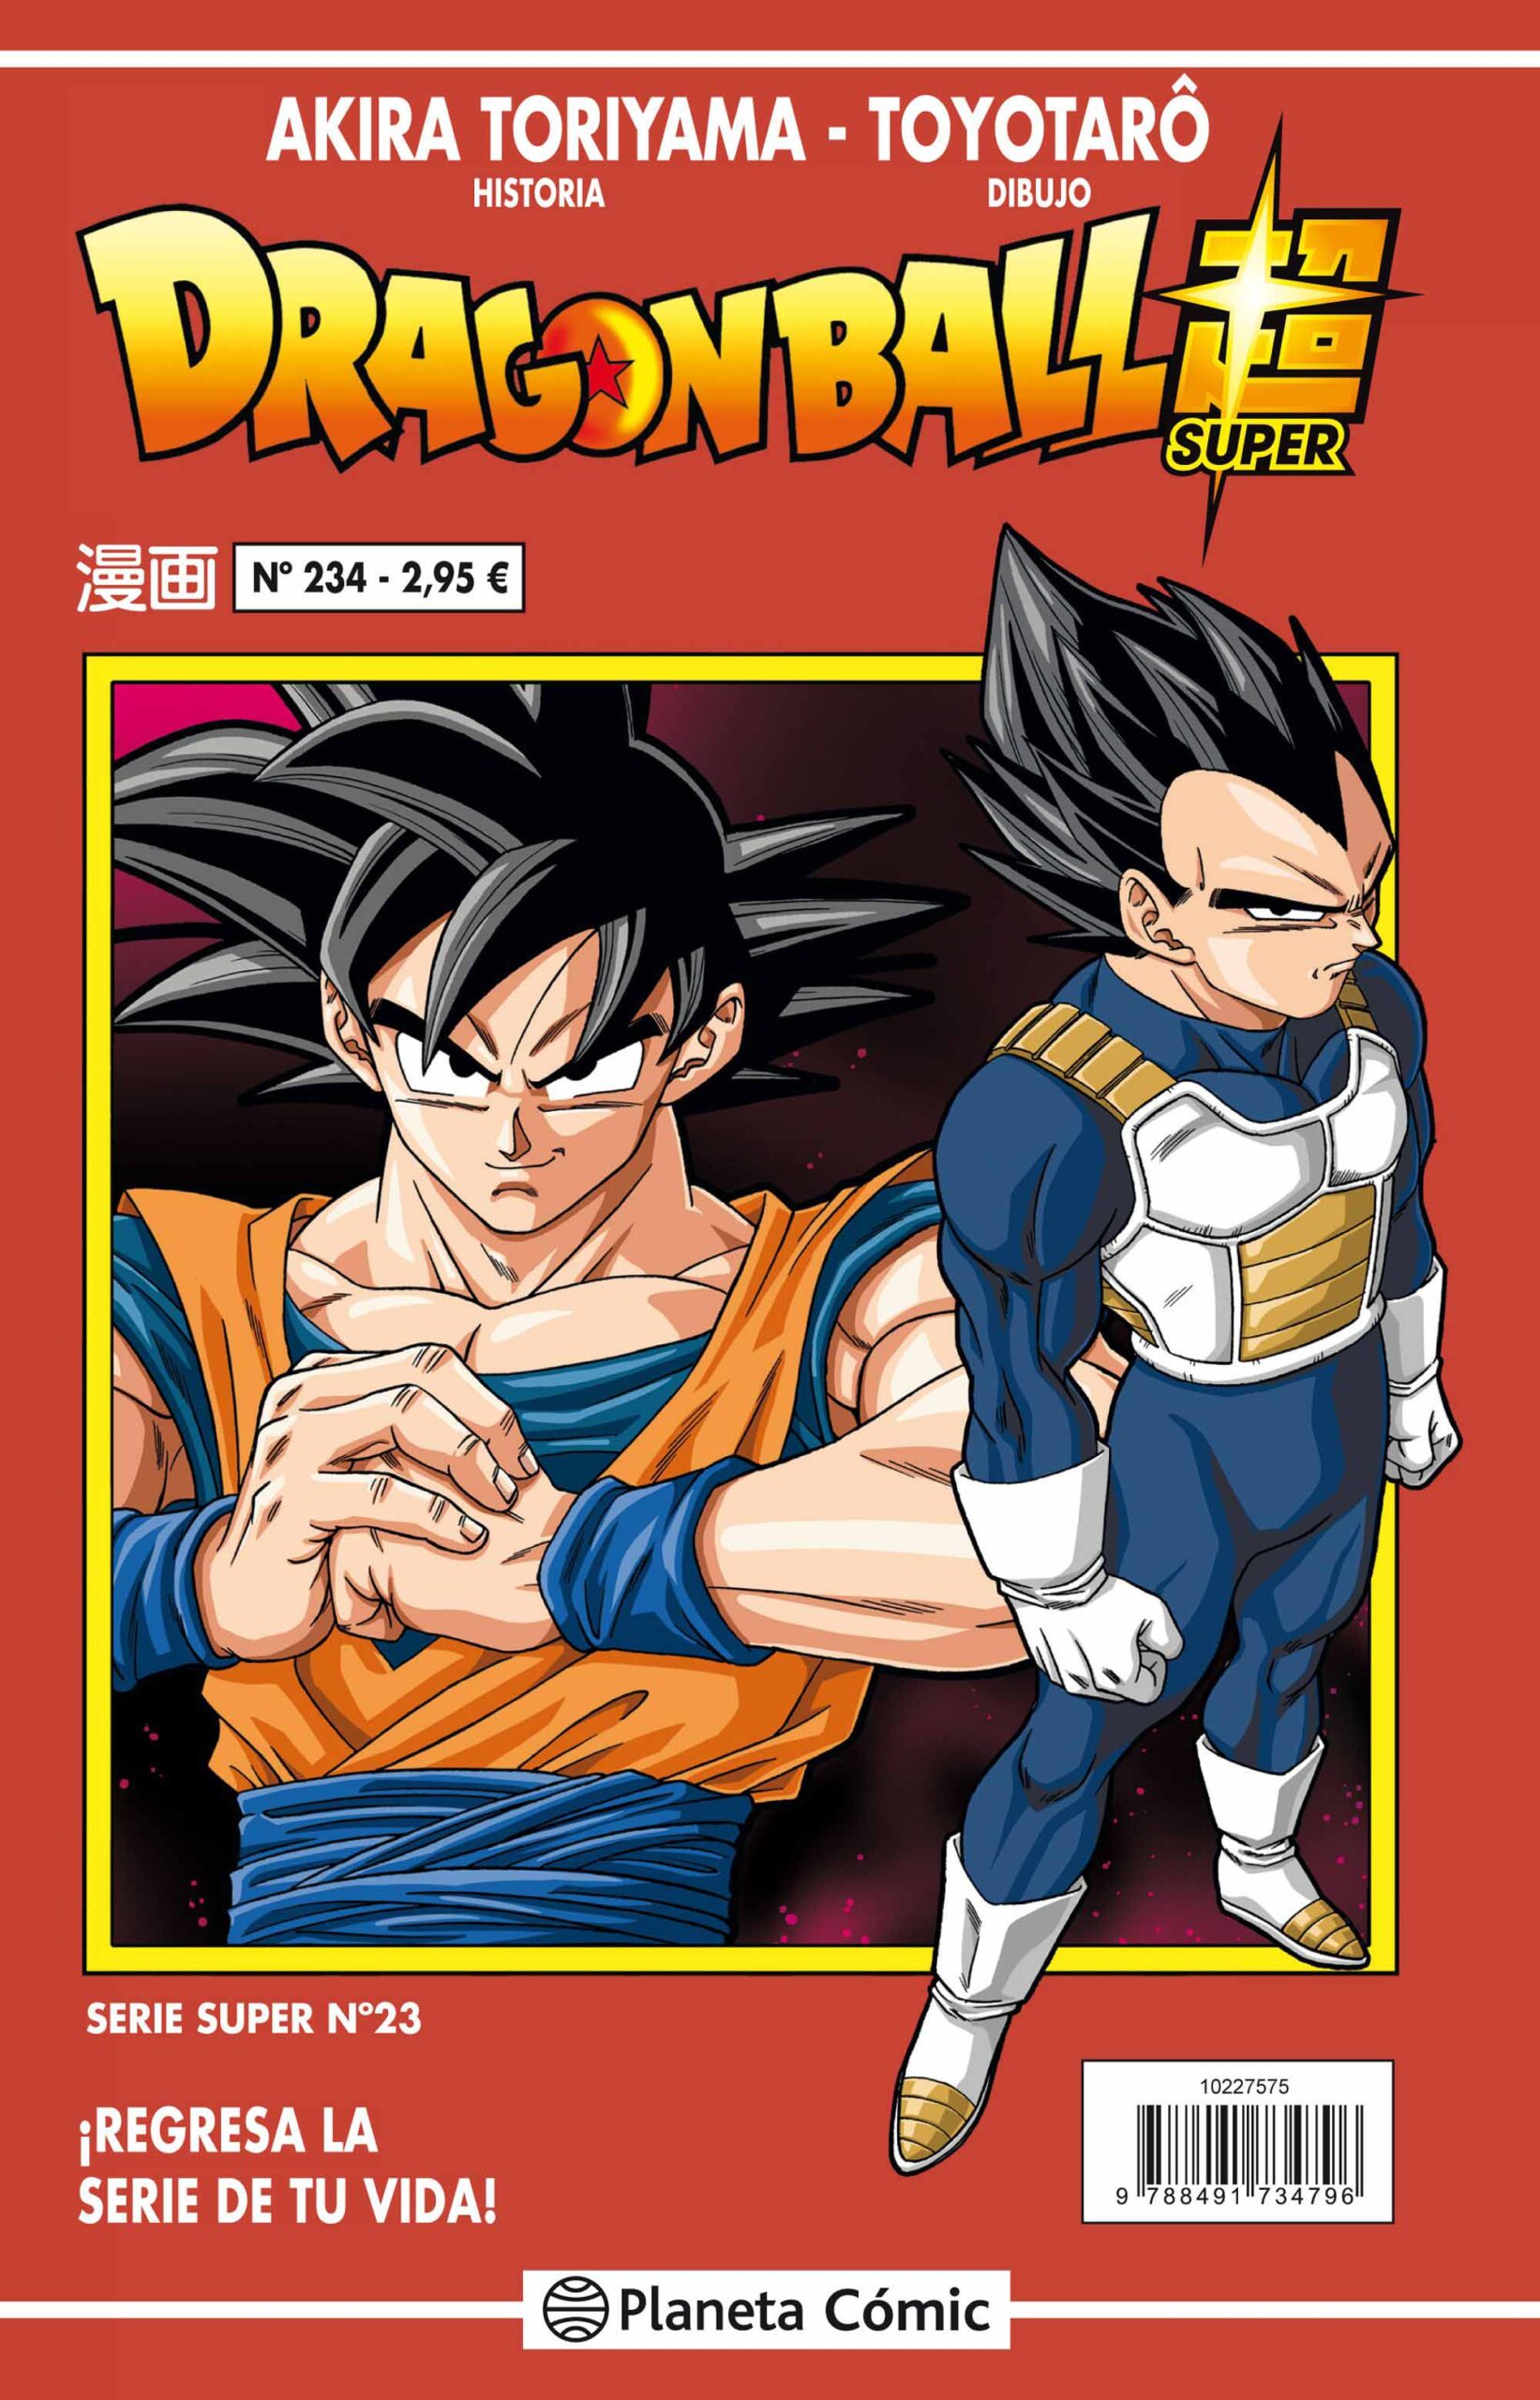 Dragon Ball Super' 23 / 234 Serie Roja, reseña del manga